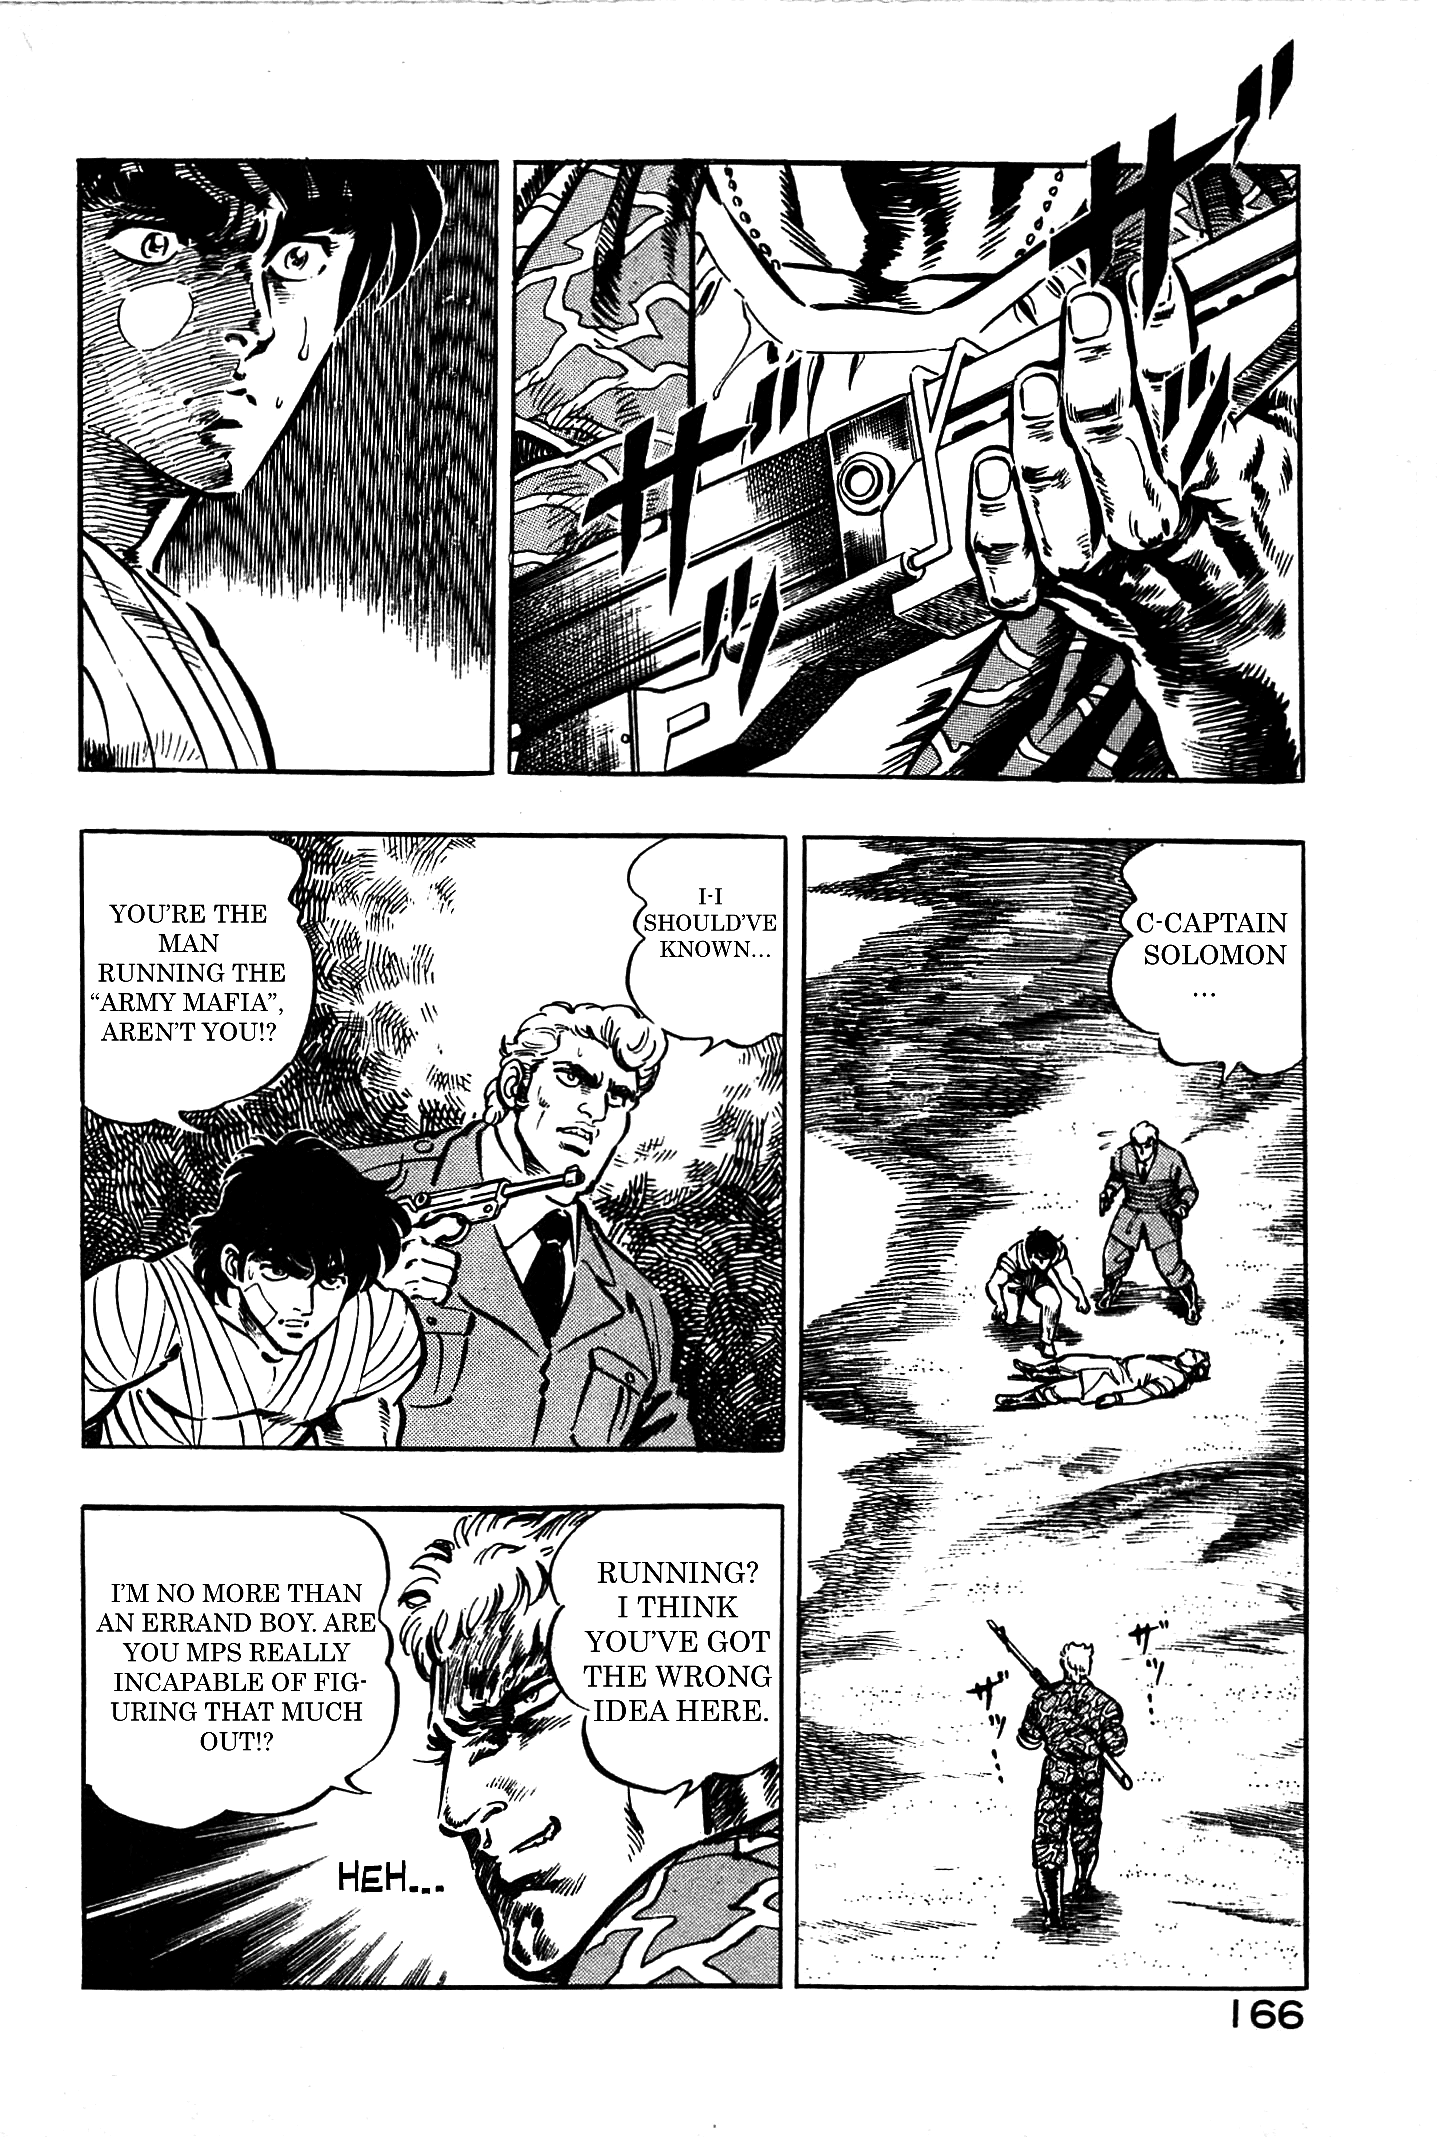 Karate Apocalypse - Page 2